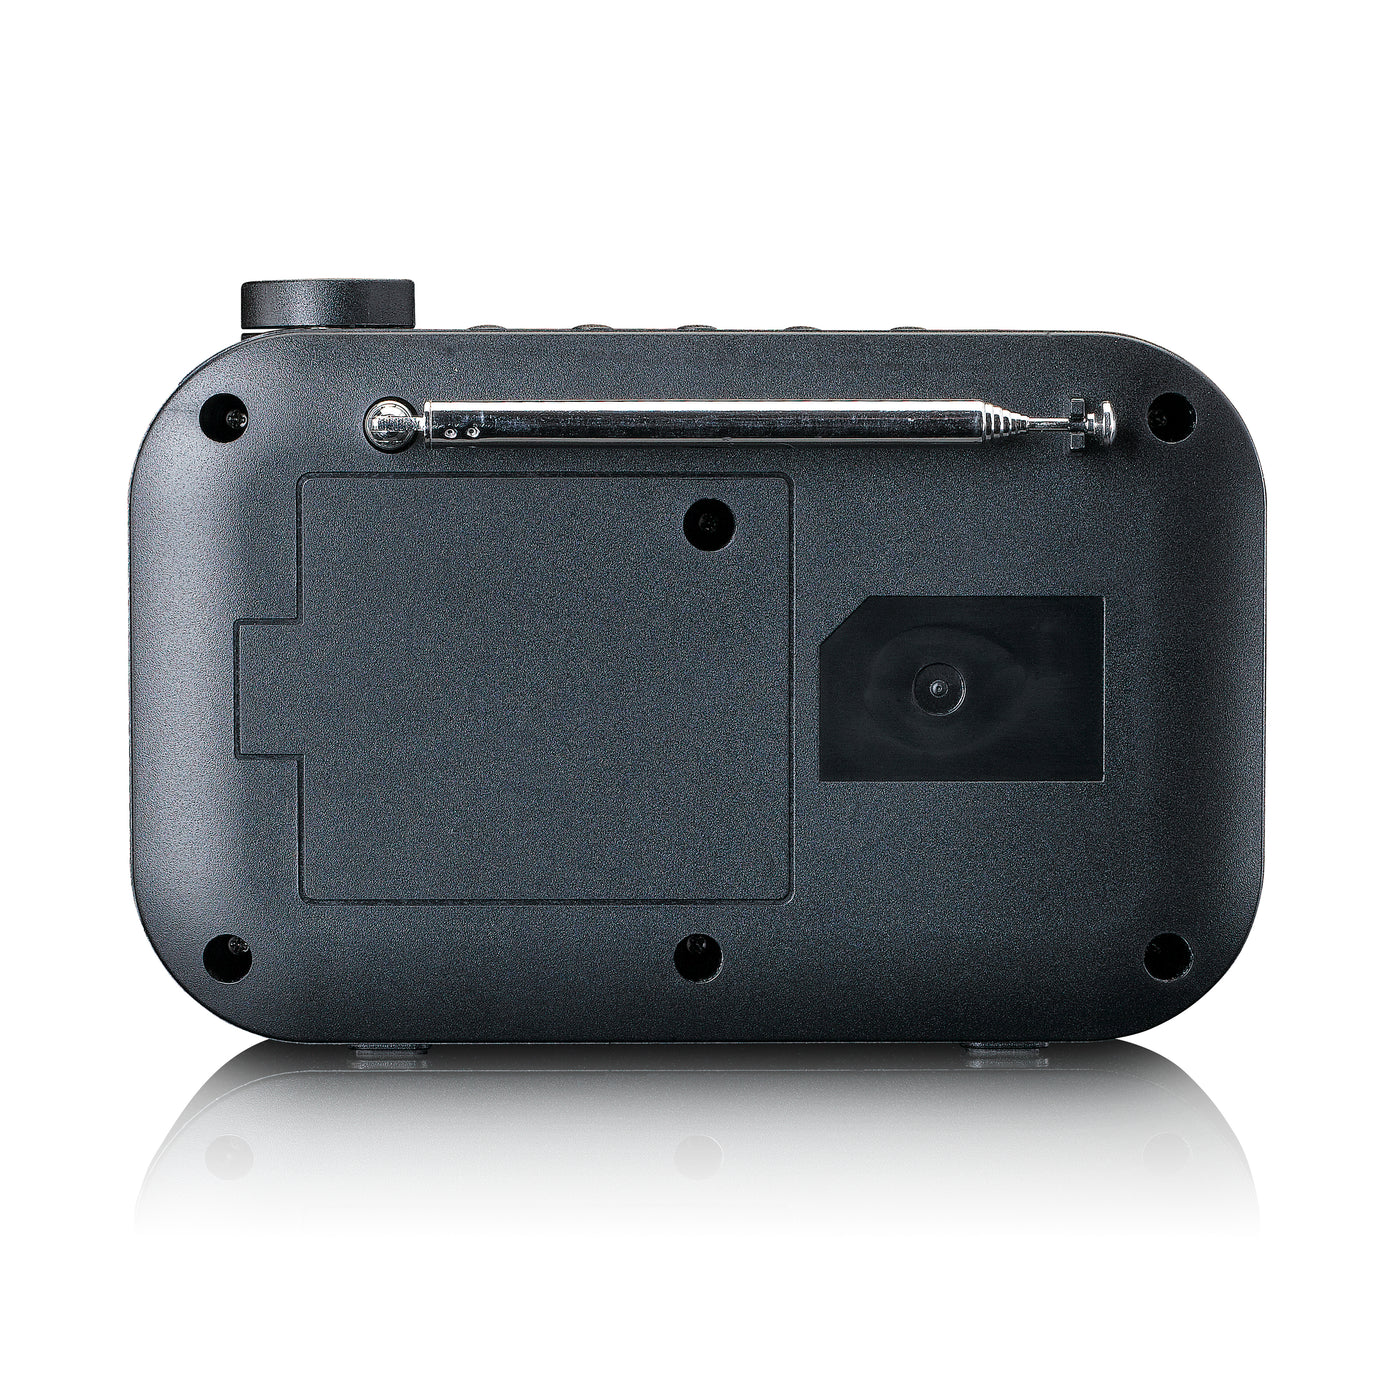 LENCO PDR-026BK - Portable DAB+/FM radio with Bluetooth® - Black – Lenco -Catalog